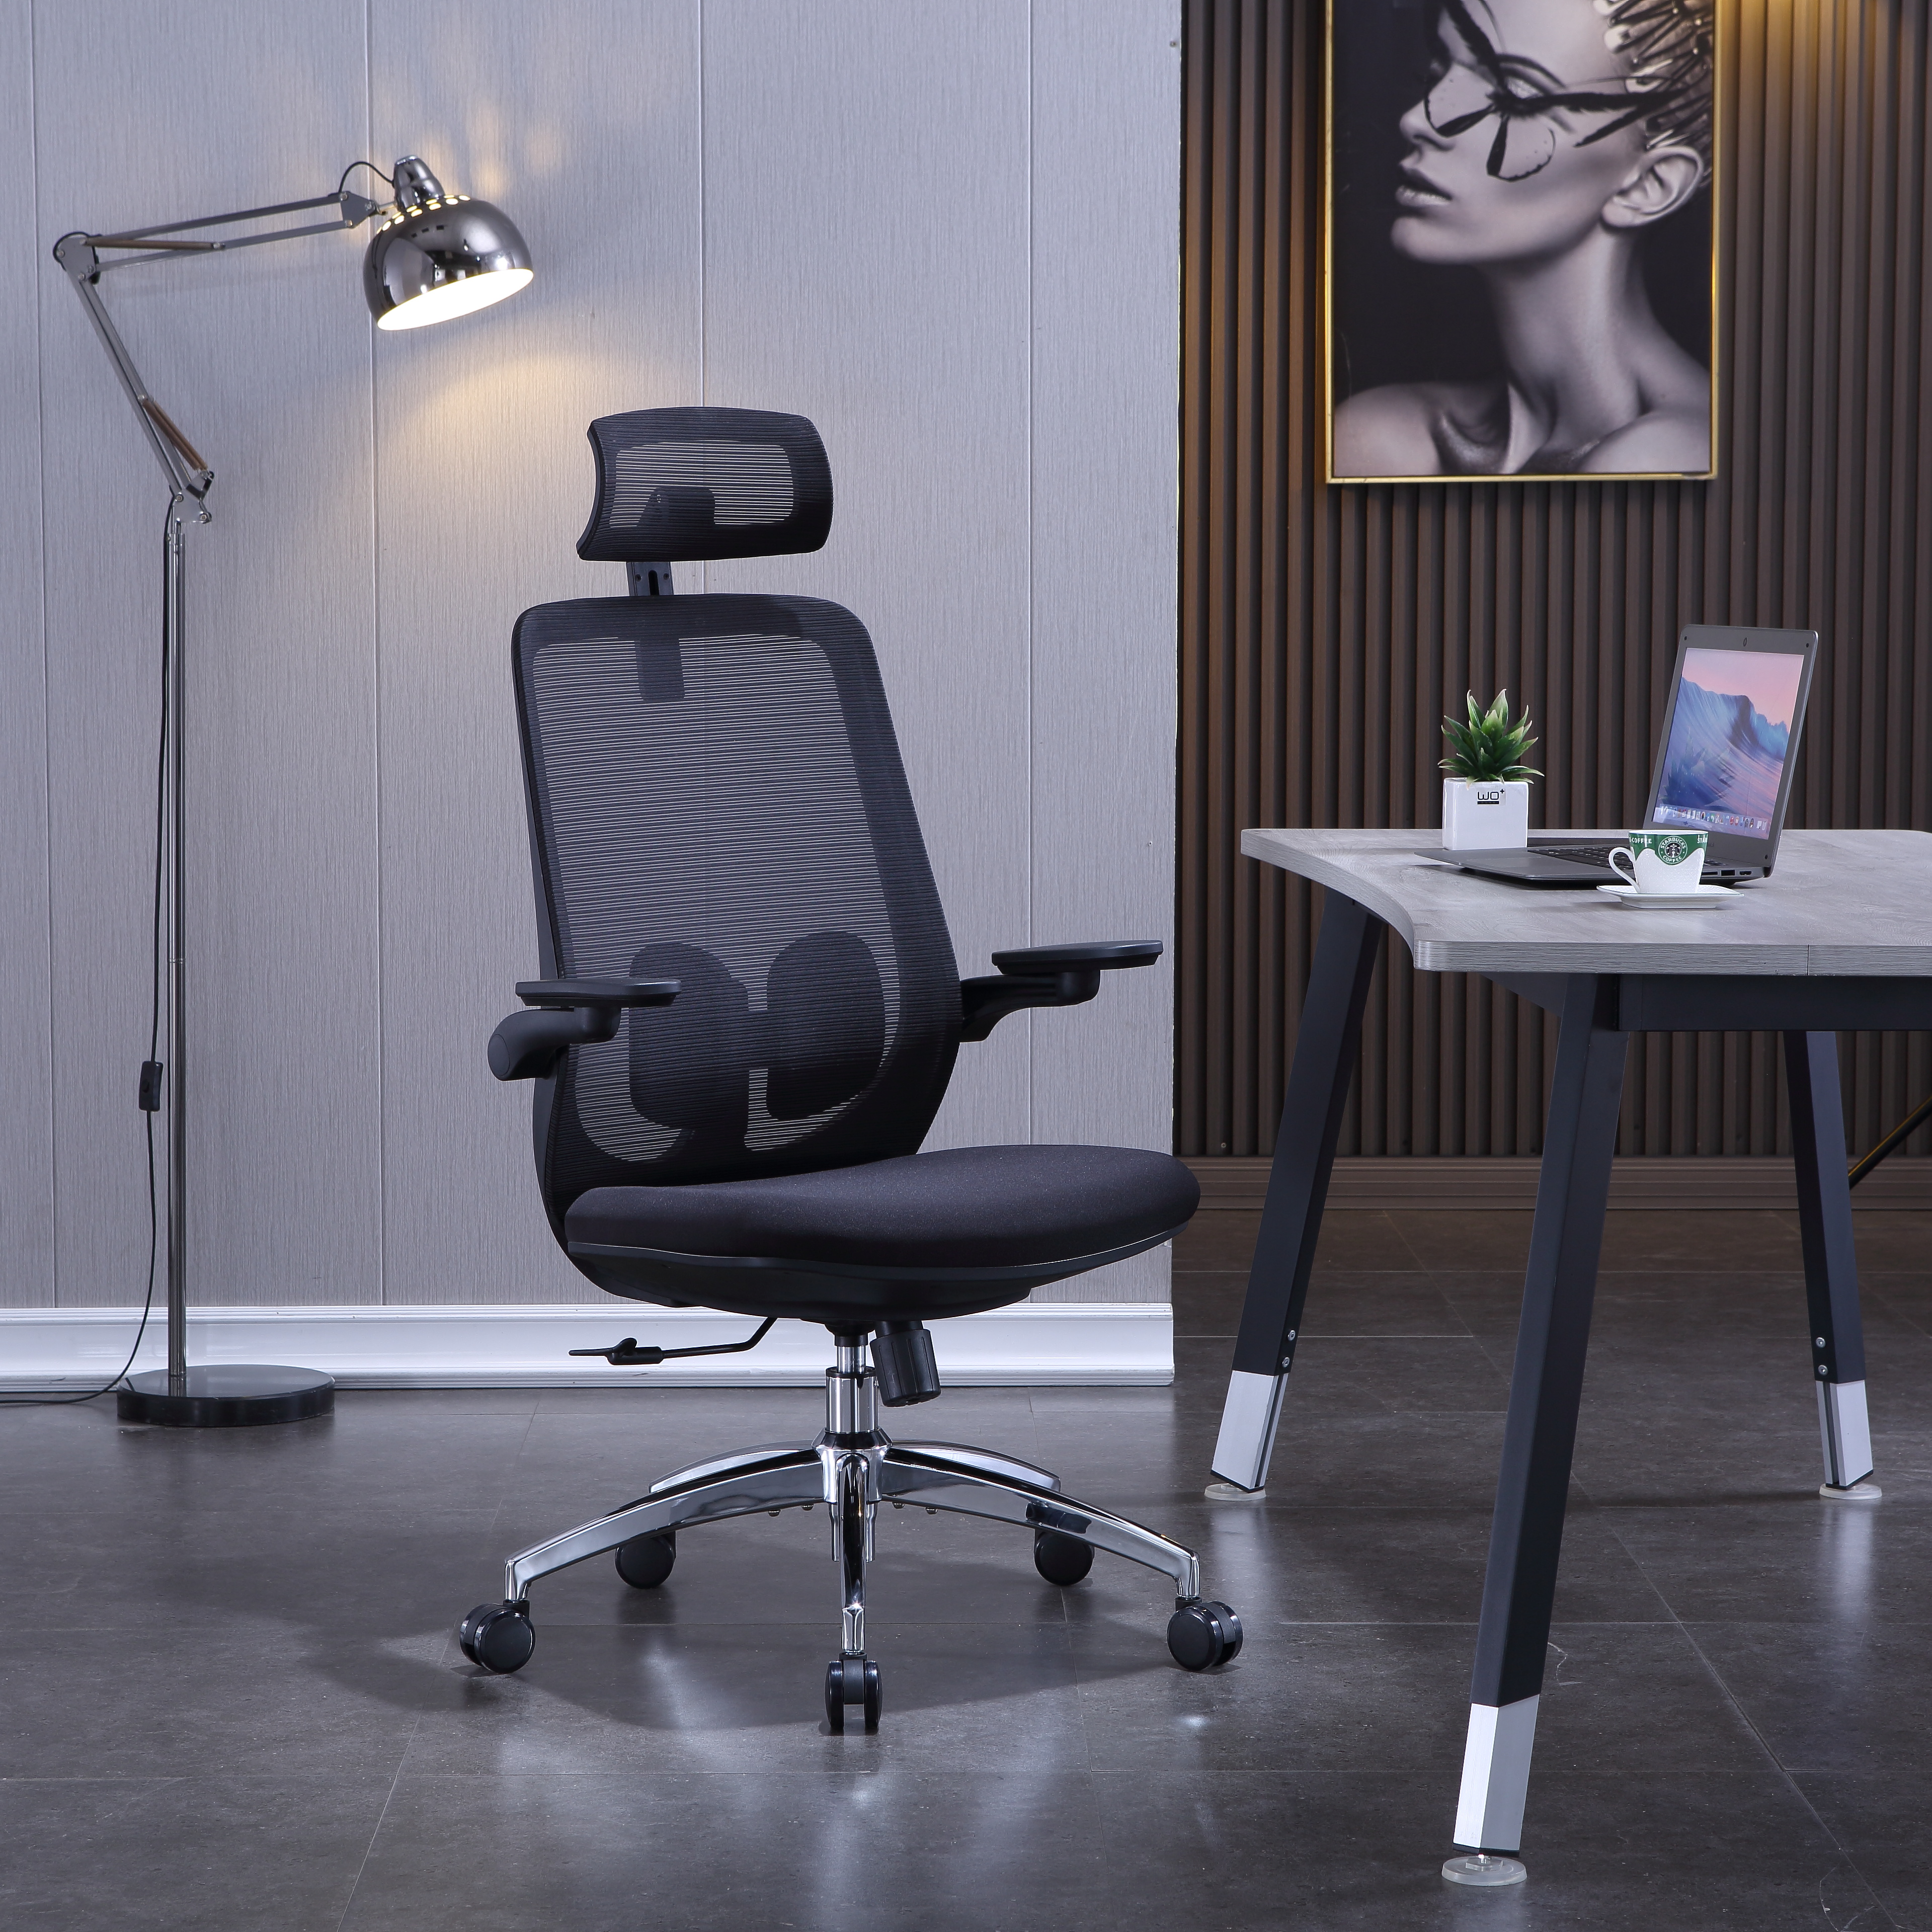 A2-H08 Black colour _BELEYO CHAIR - A2 Shaped cotton cushion Ergonomic office chair_Beleyo chair - 1